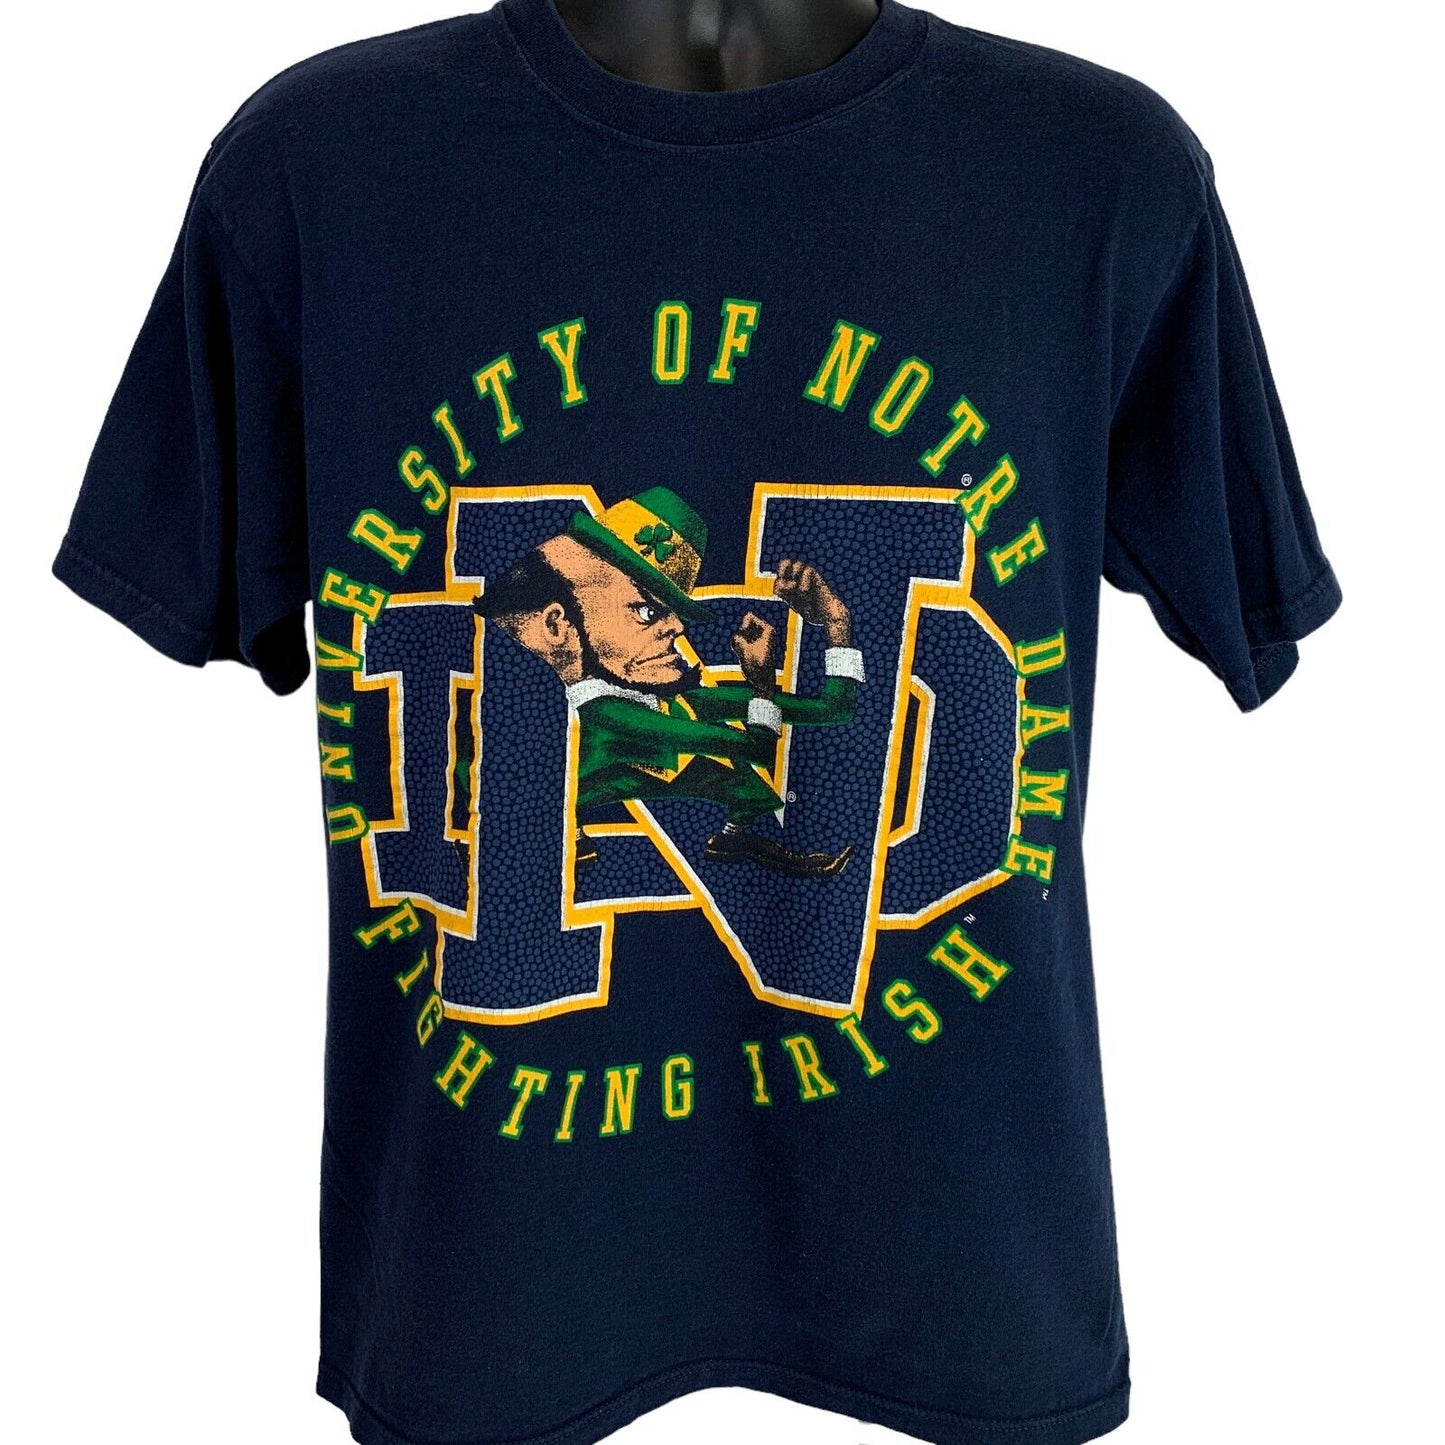 Notre Dame Fighting Irish Vintage 90s T Shirt NCAA University Blue Tee Large